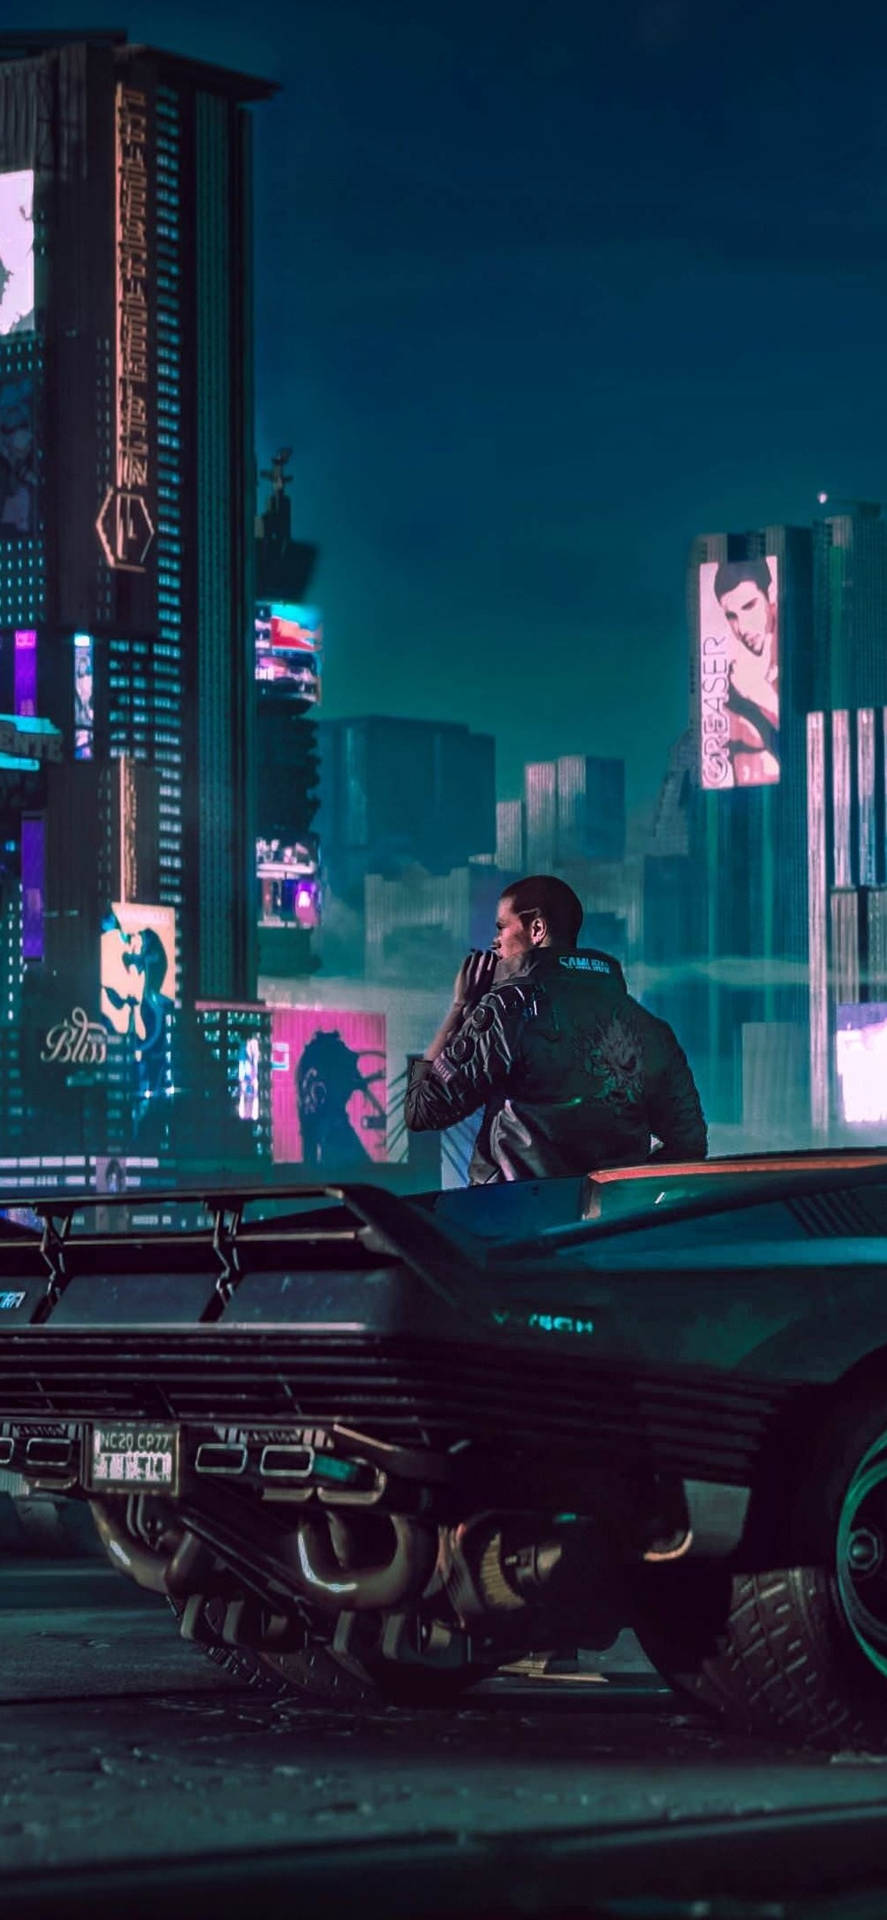 Man With Car Cyberpunk Iphone X Wallpaper